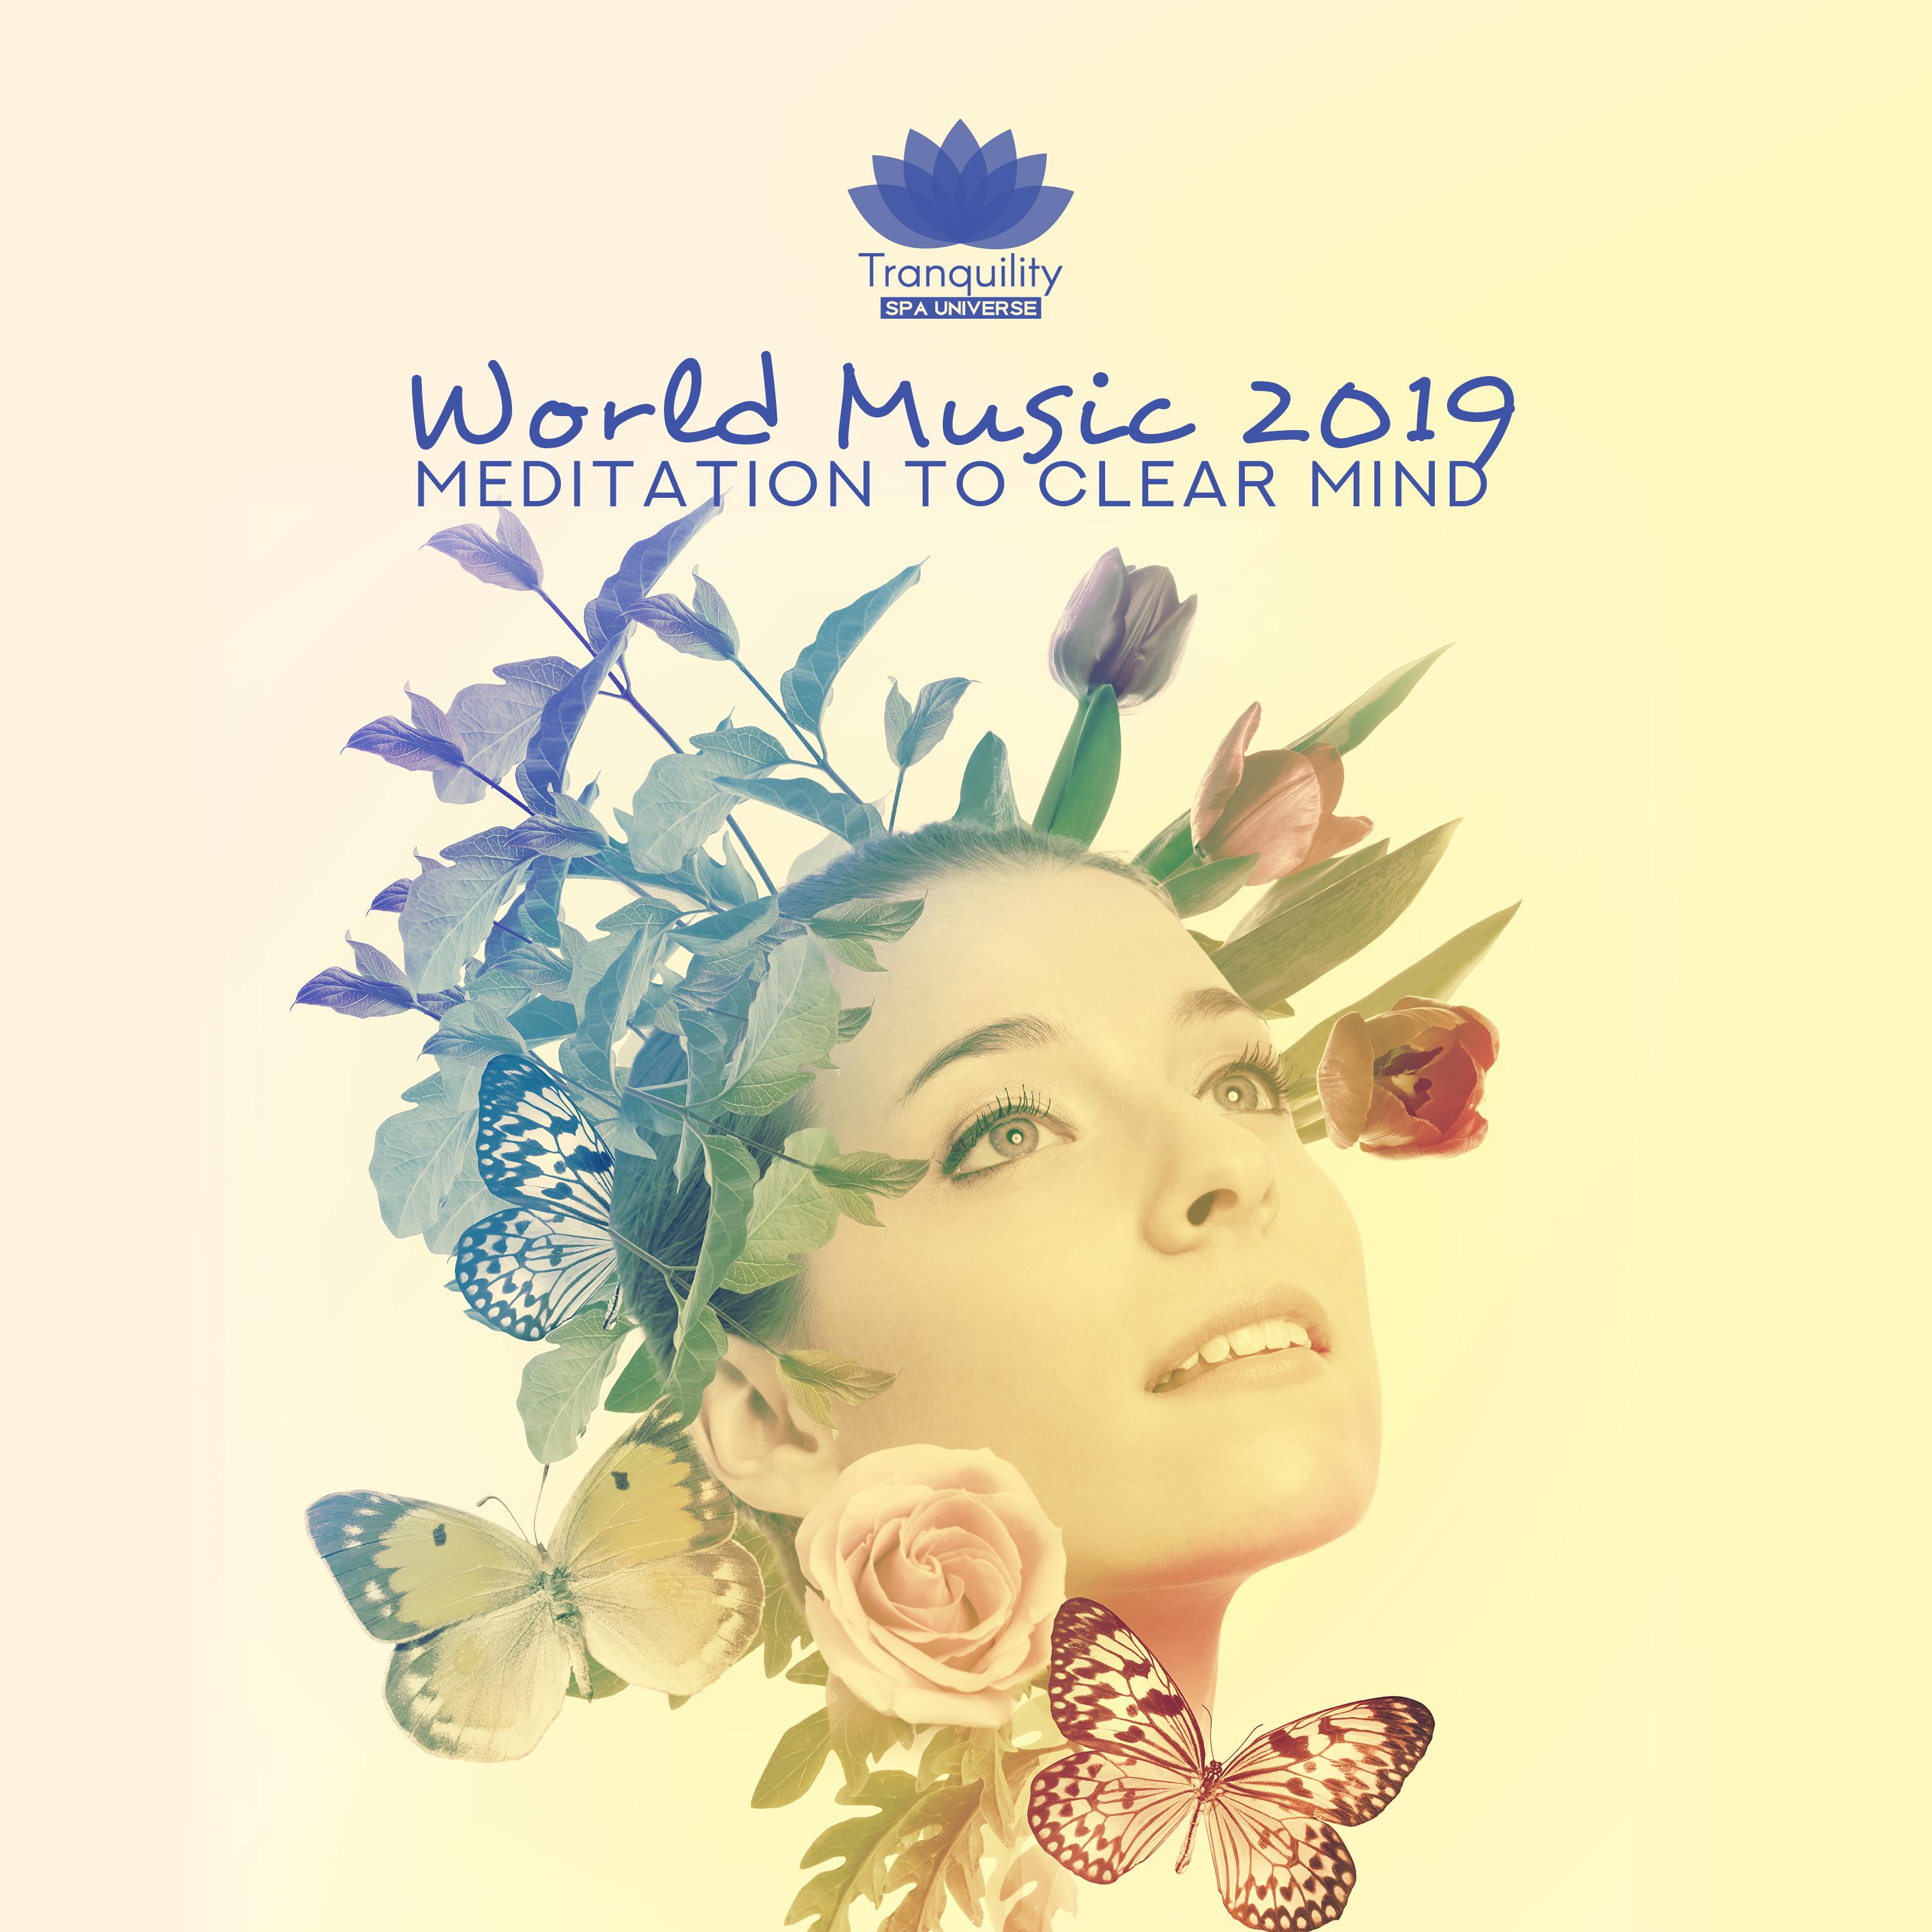 World Music 2019